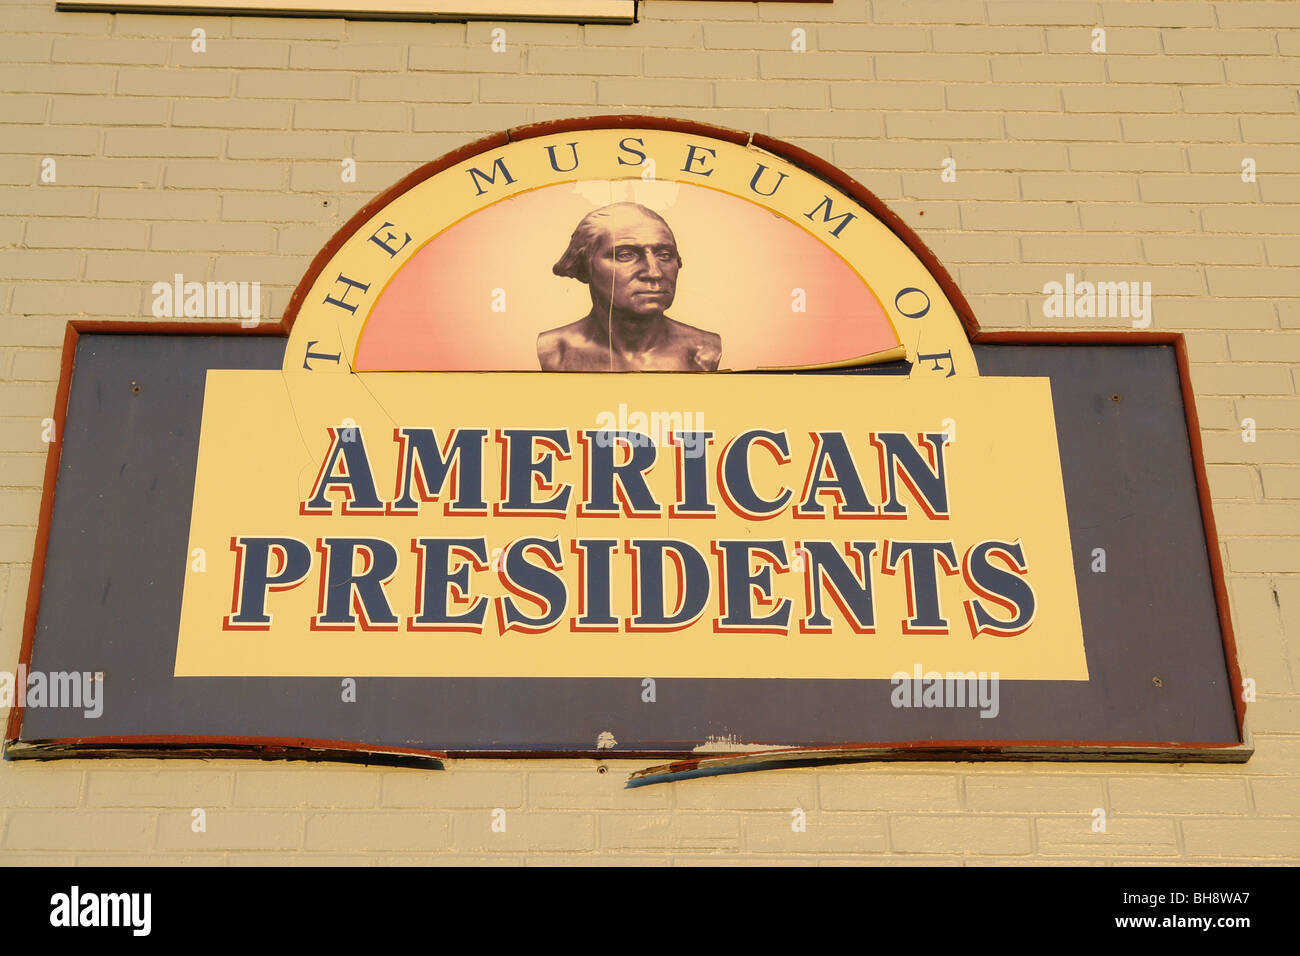 AJD63976, Strasburg, VA, Virginia, Historic District, downtown, The Museum of American Presidents Stock Photo